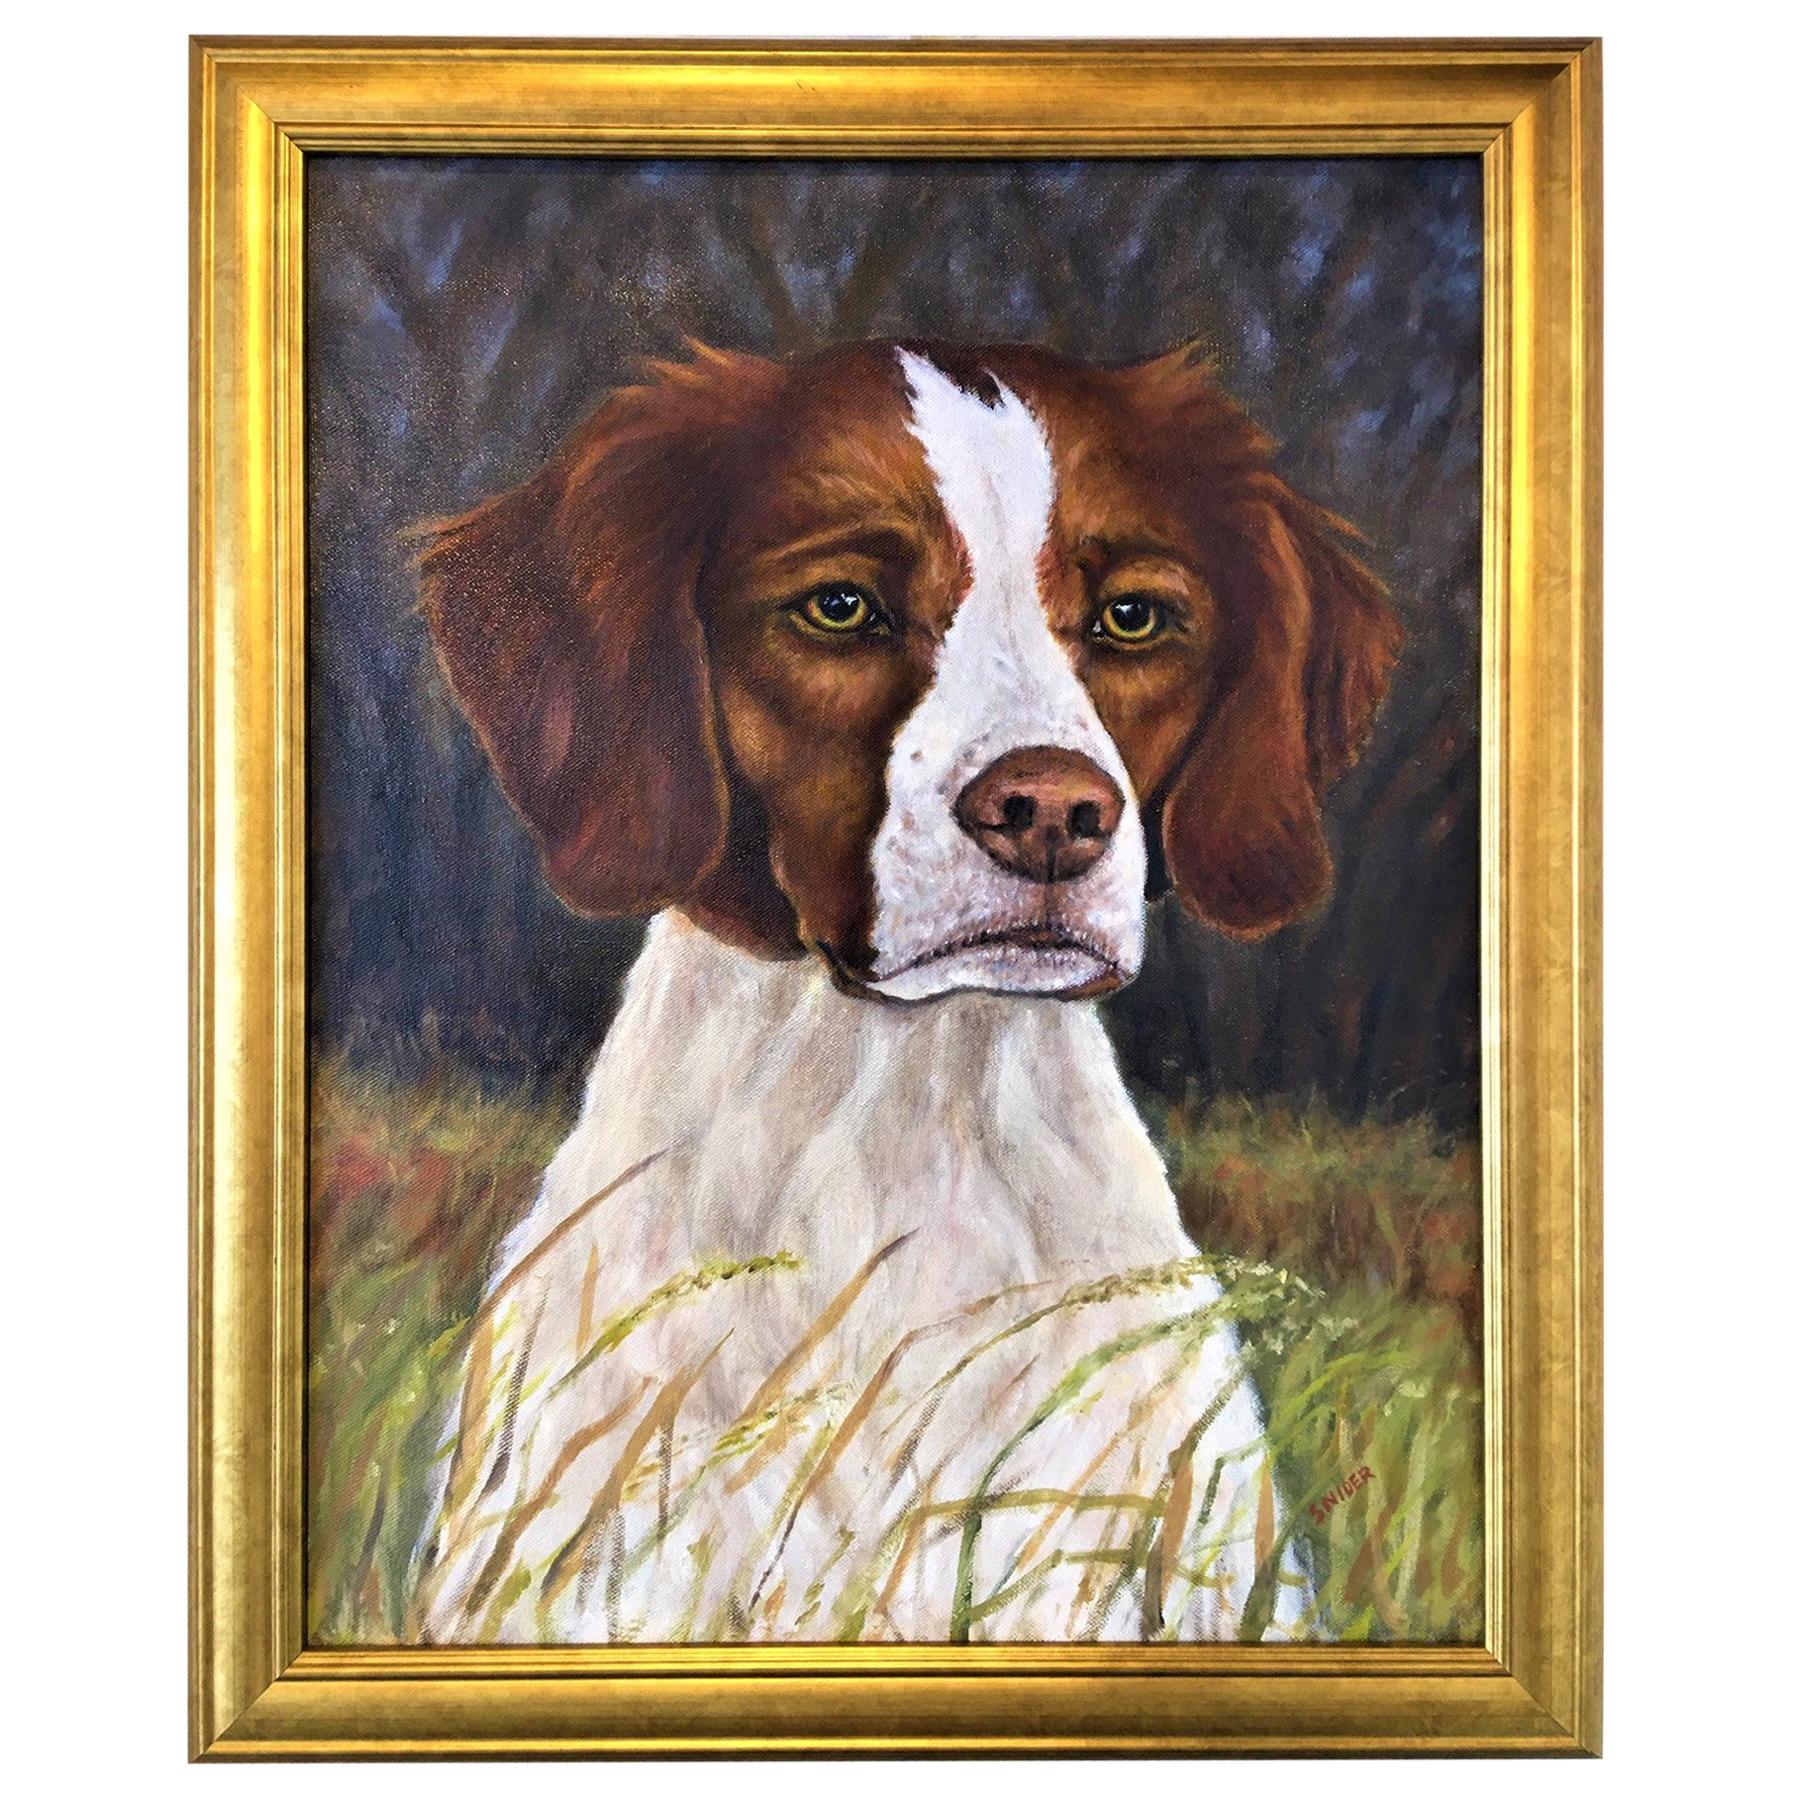 Framed Oil on Canvas "Brittany Dog Portrait", Lawrence Snider, circa 2014